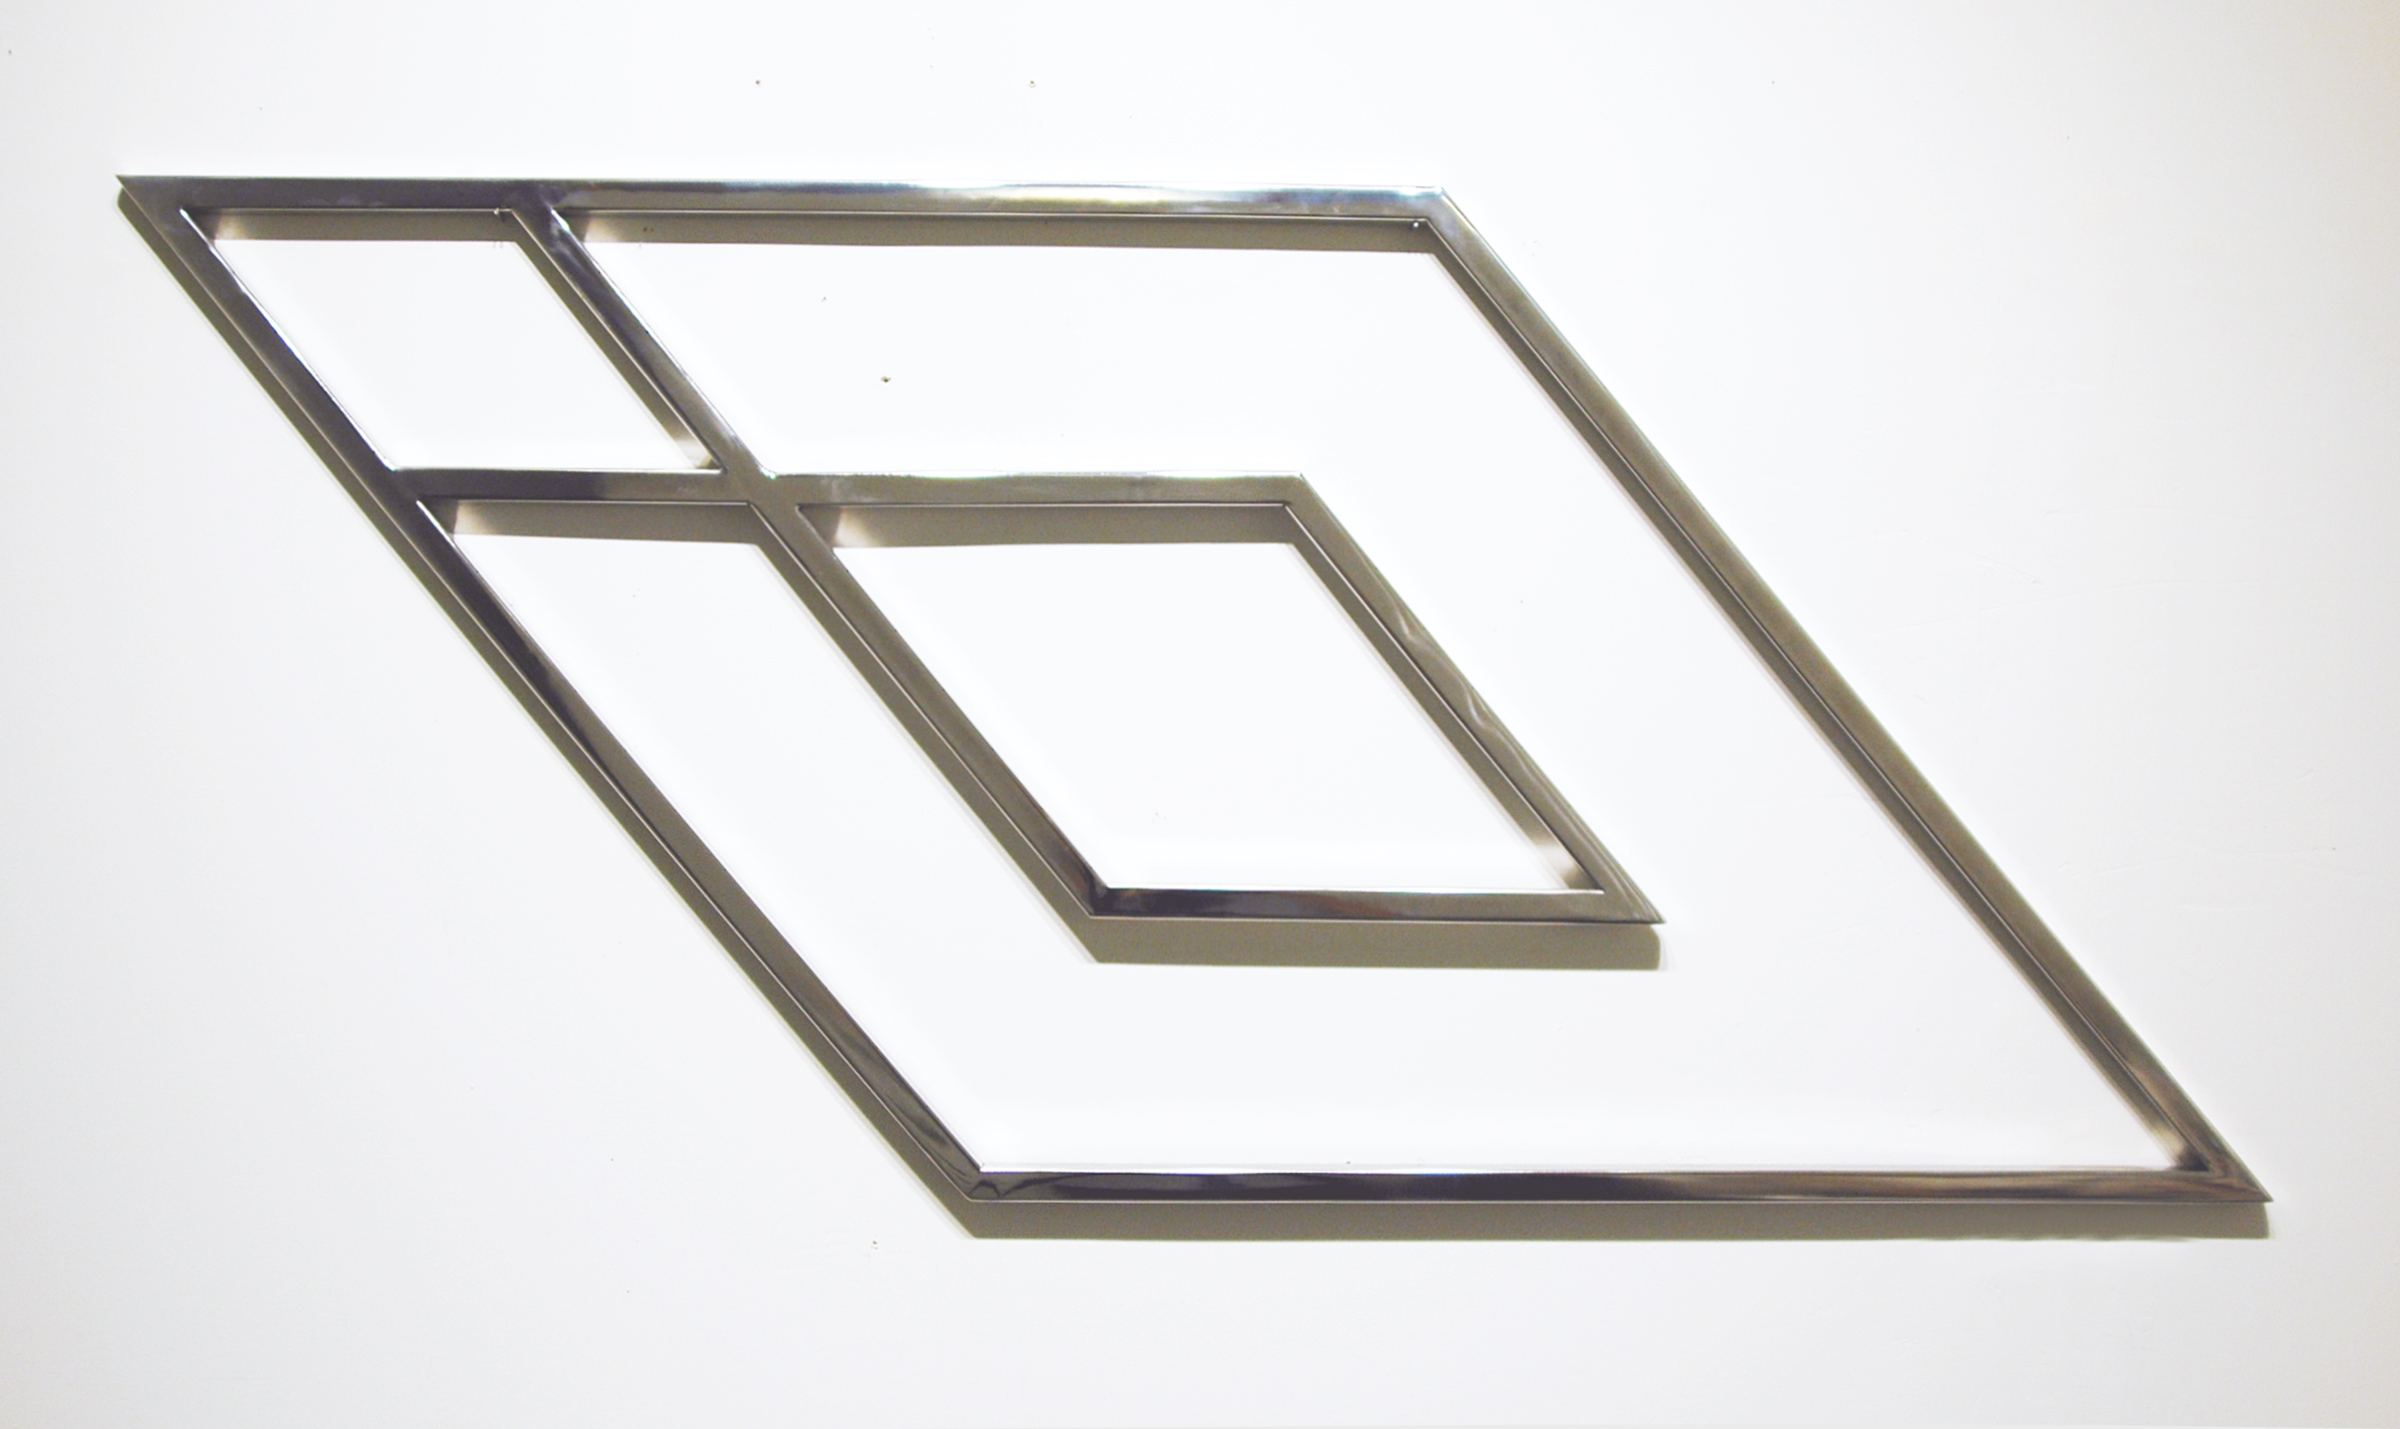   JONATHAN RUNCIO   Untitled , polished stainless steel, 48" x 21.5", 2013 